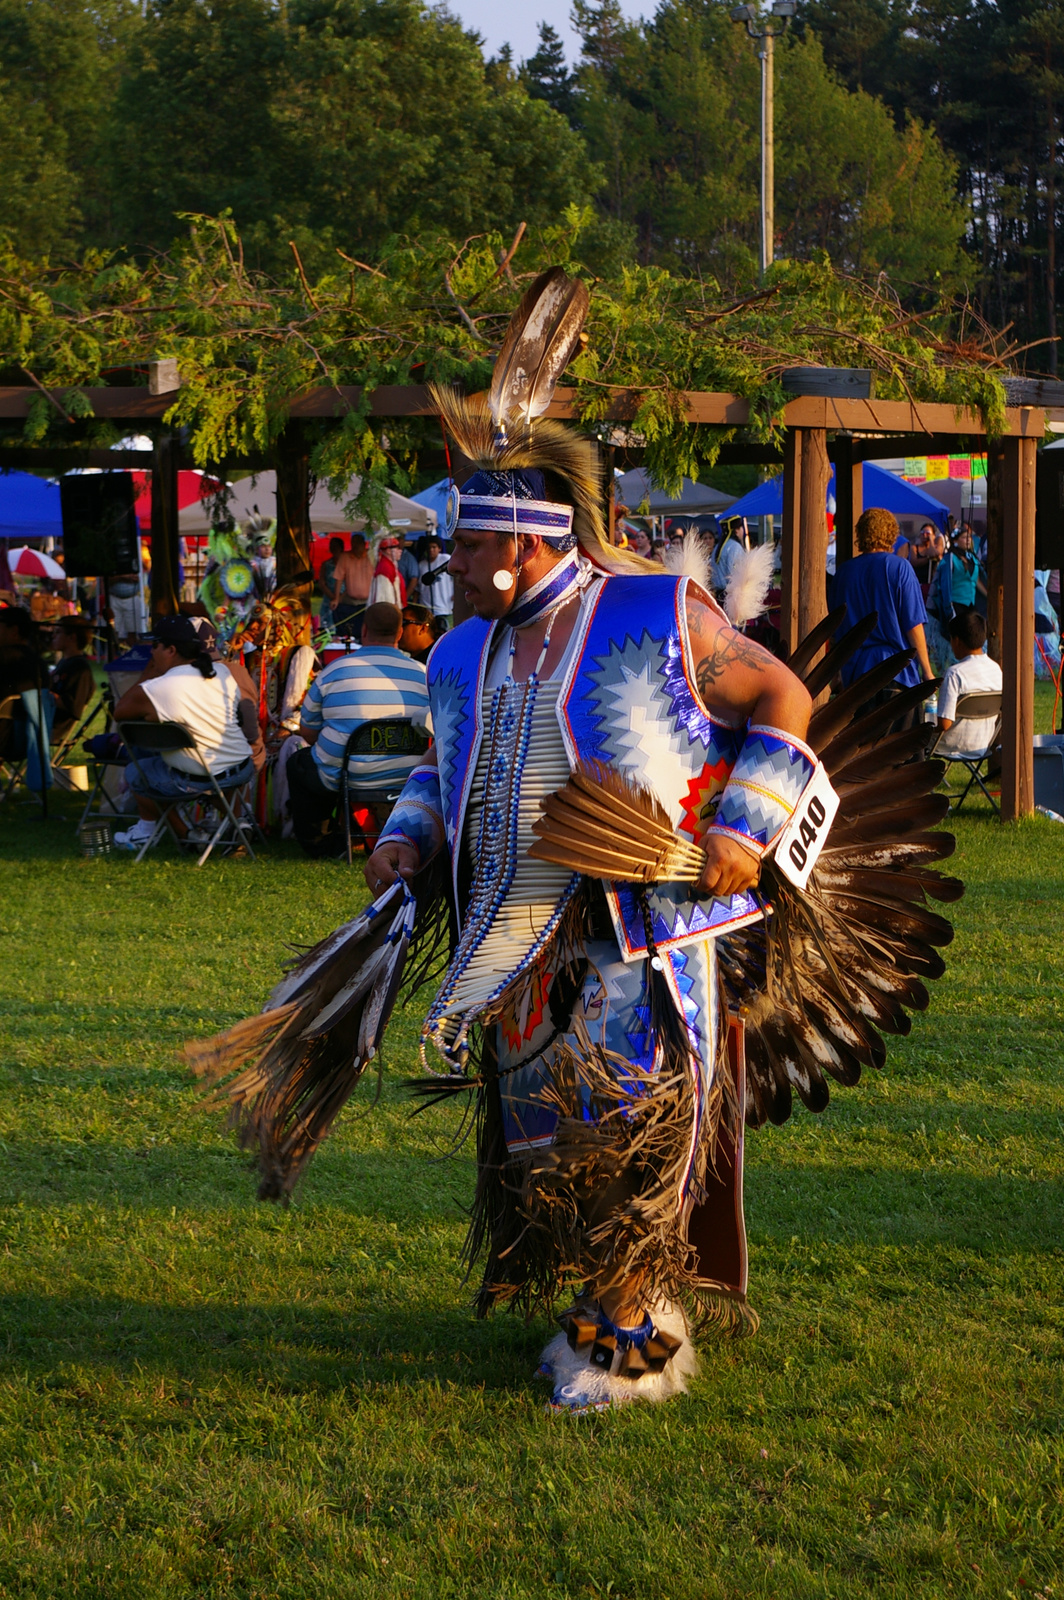 Powwow indiántánc